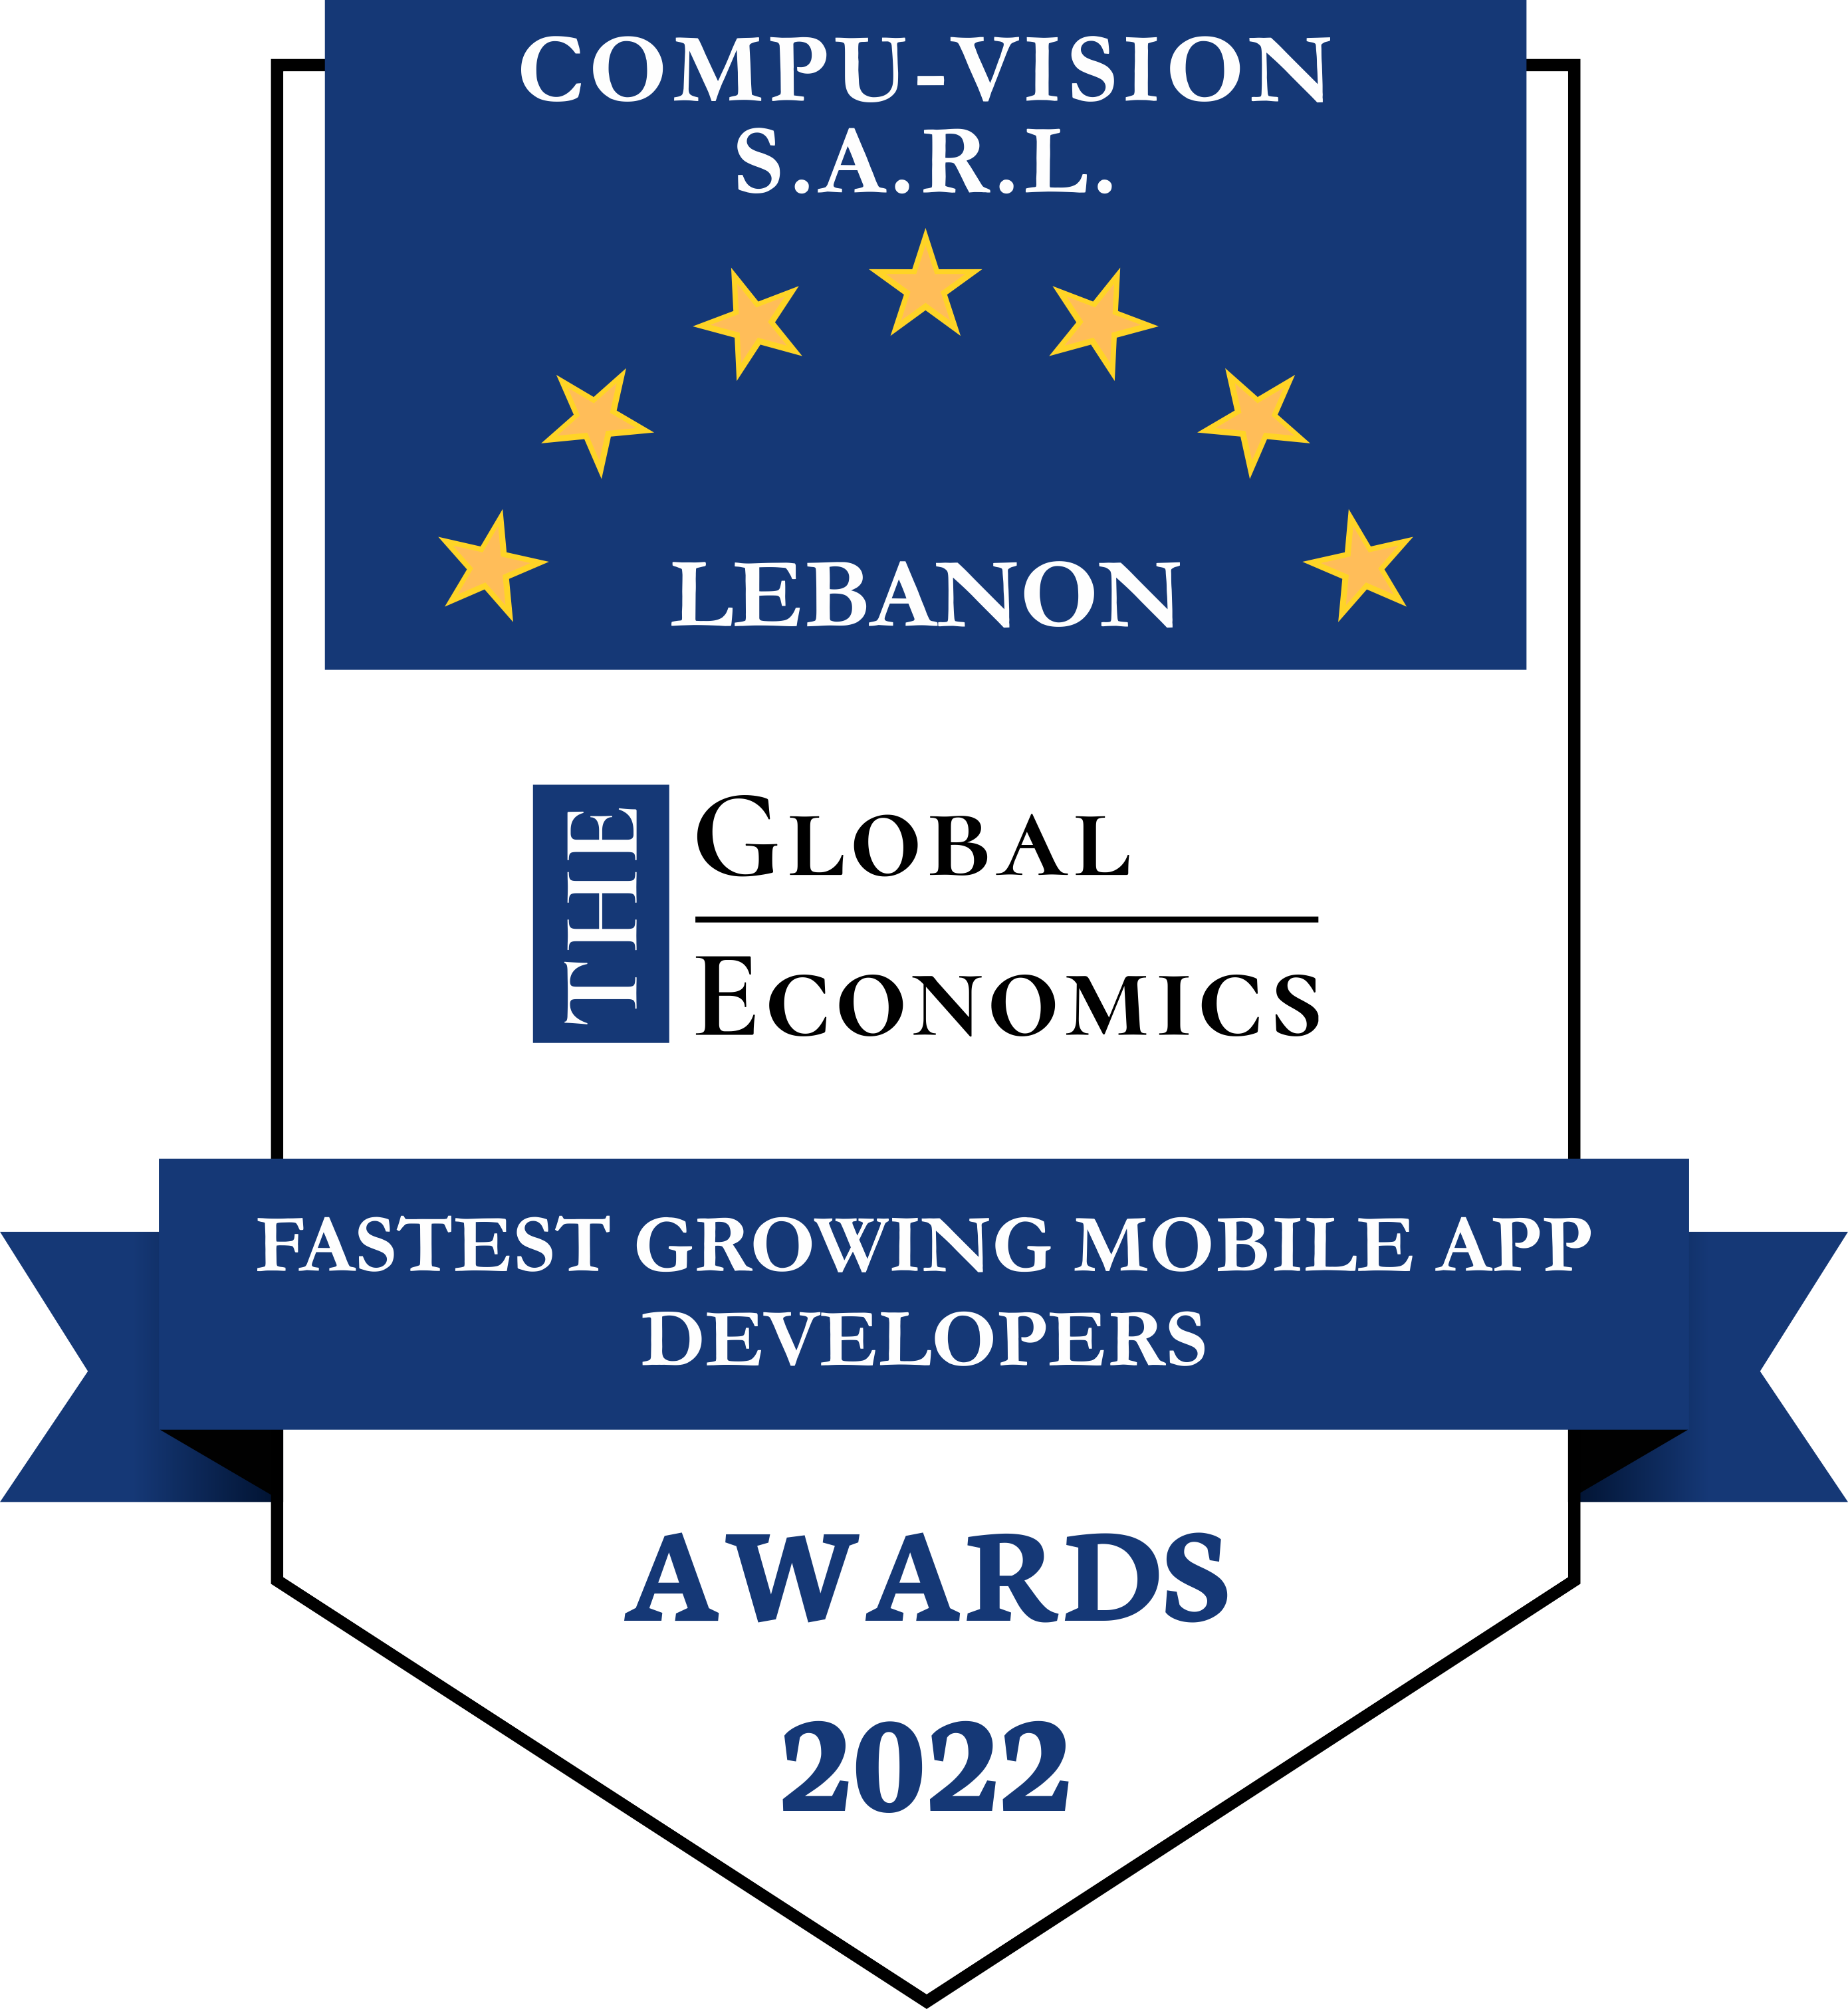 Fastest growing mobile app developers in Lebanon 2022